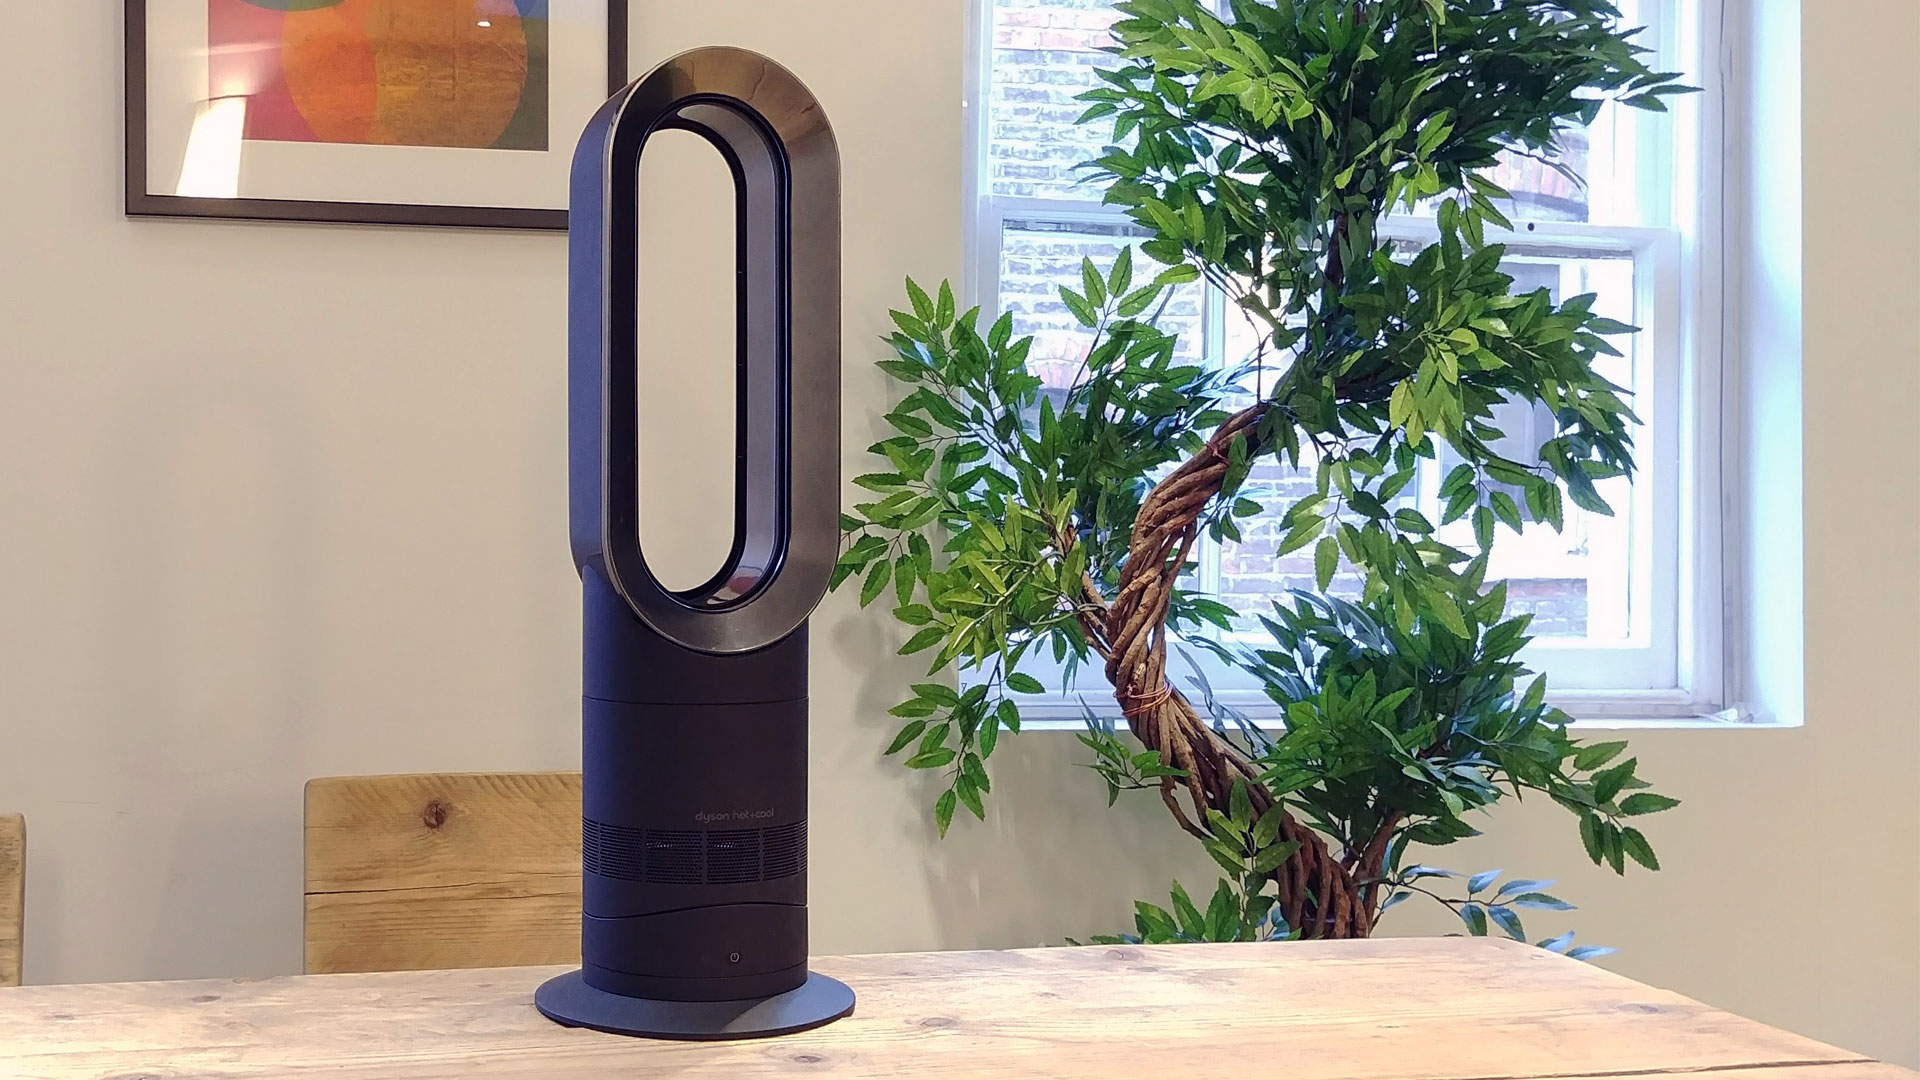 frisk Styre Precipice Dyson AM09 Hot + Cool fan heater review | TechRadar